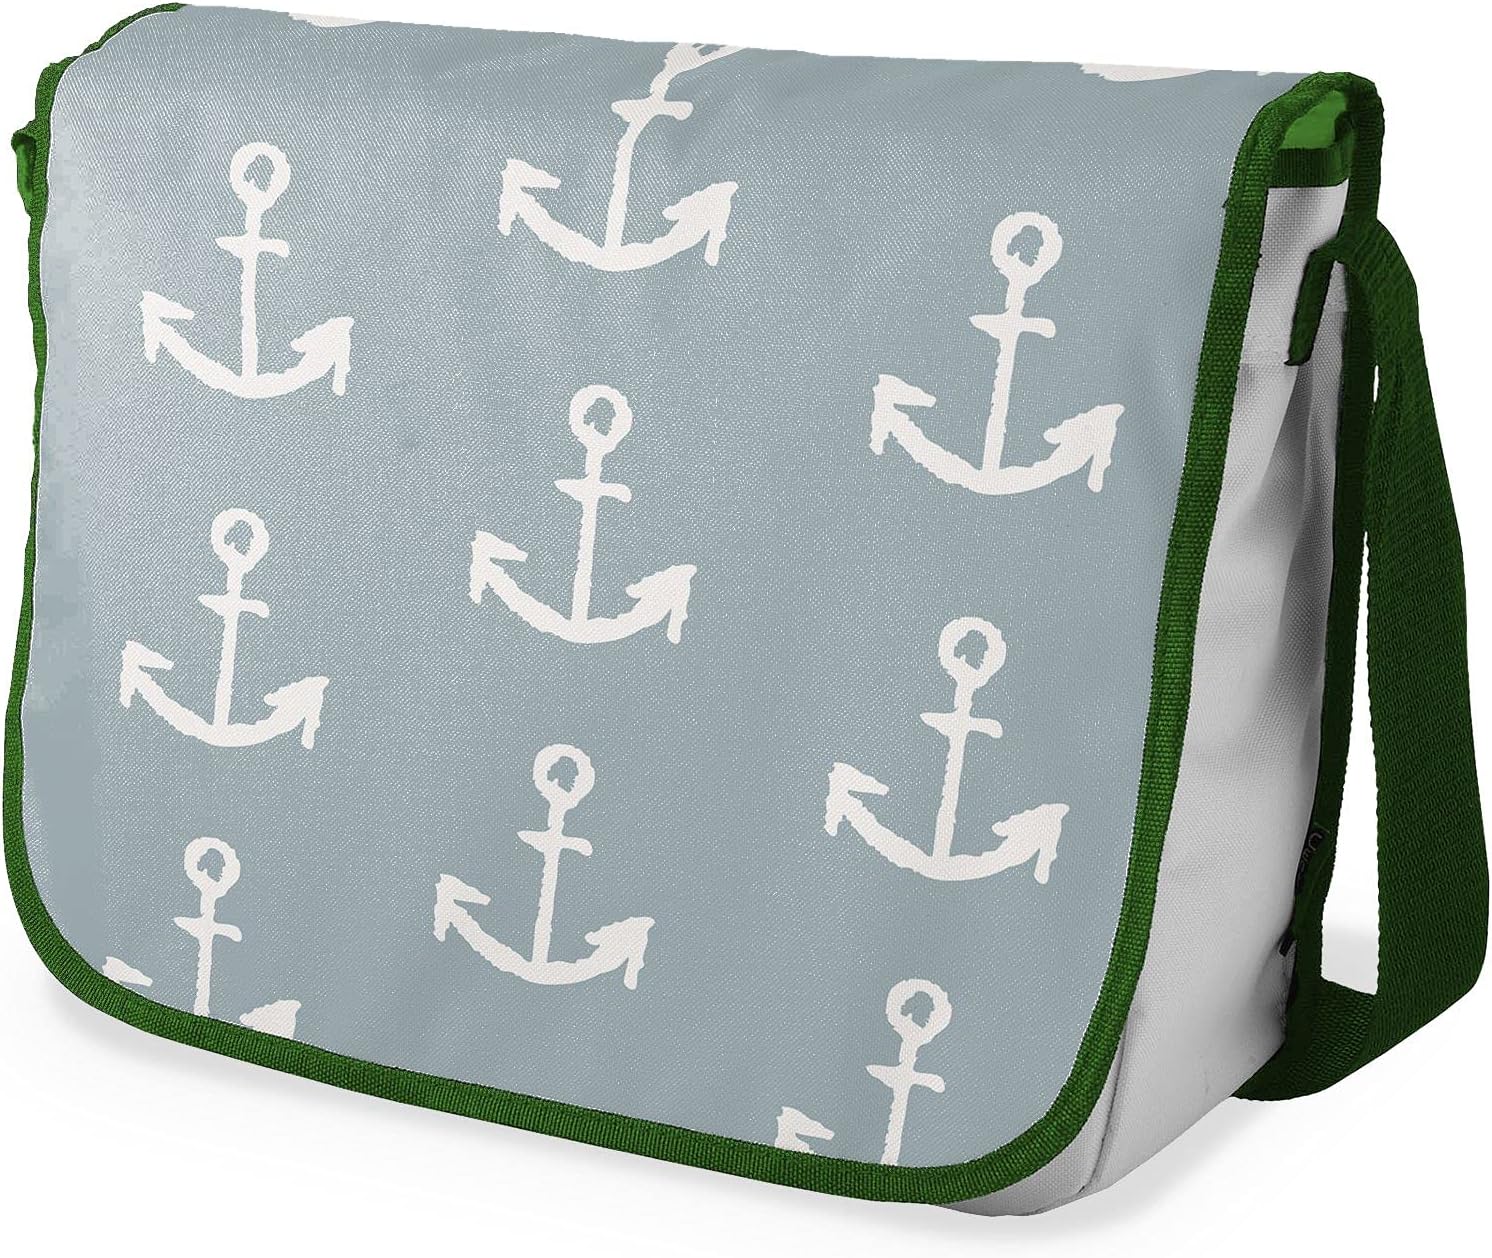 Bonamaison Ship Anchors Pattern Messenger School Bag w/ Khaki Strap RRP £16.91 CLEARANCE XL £9.99